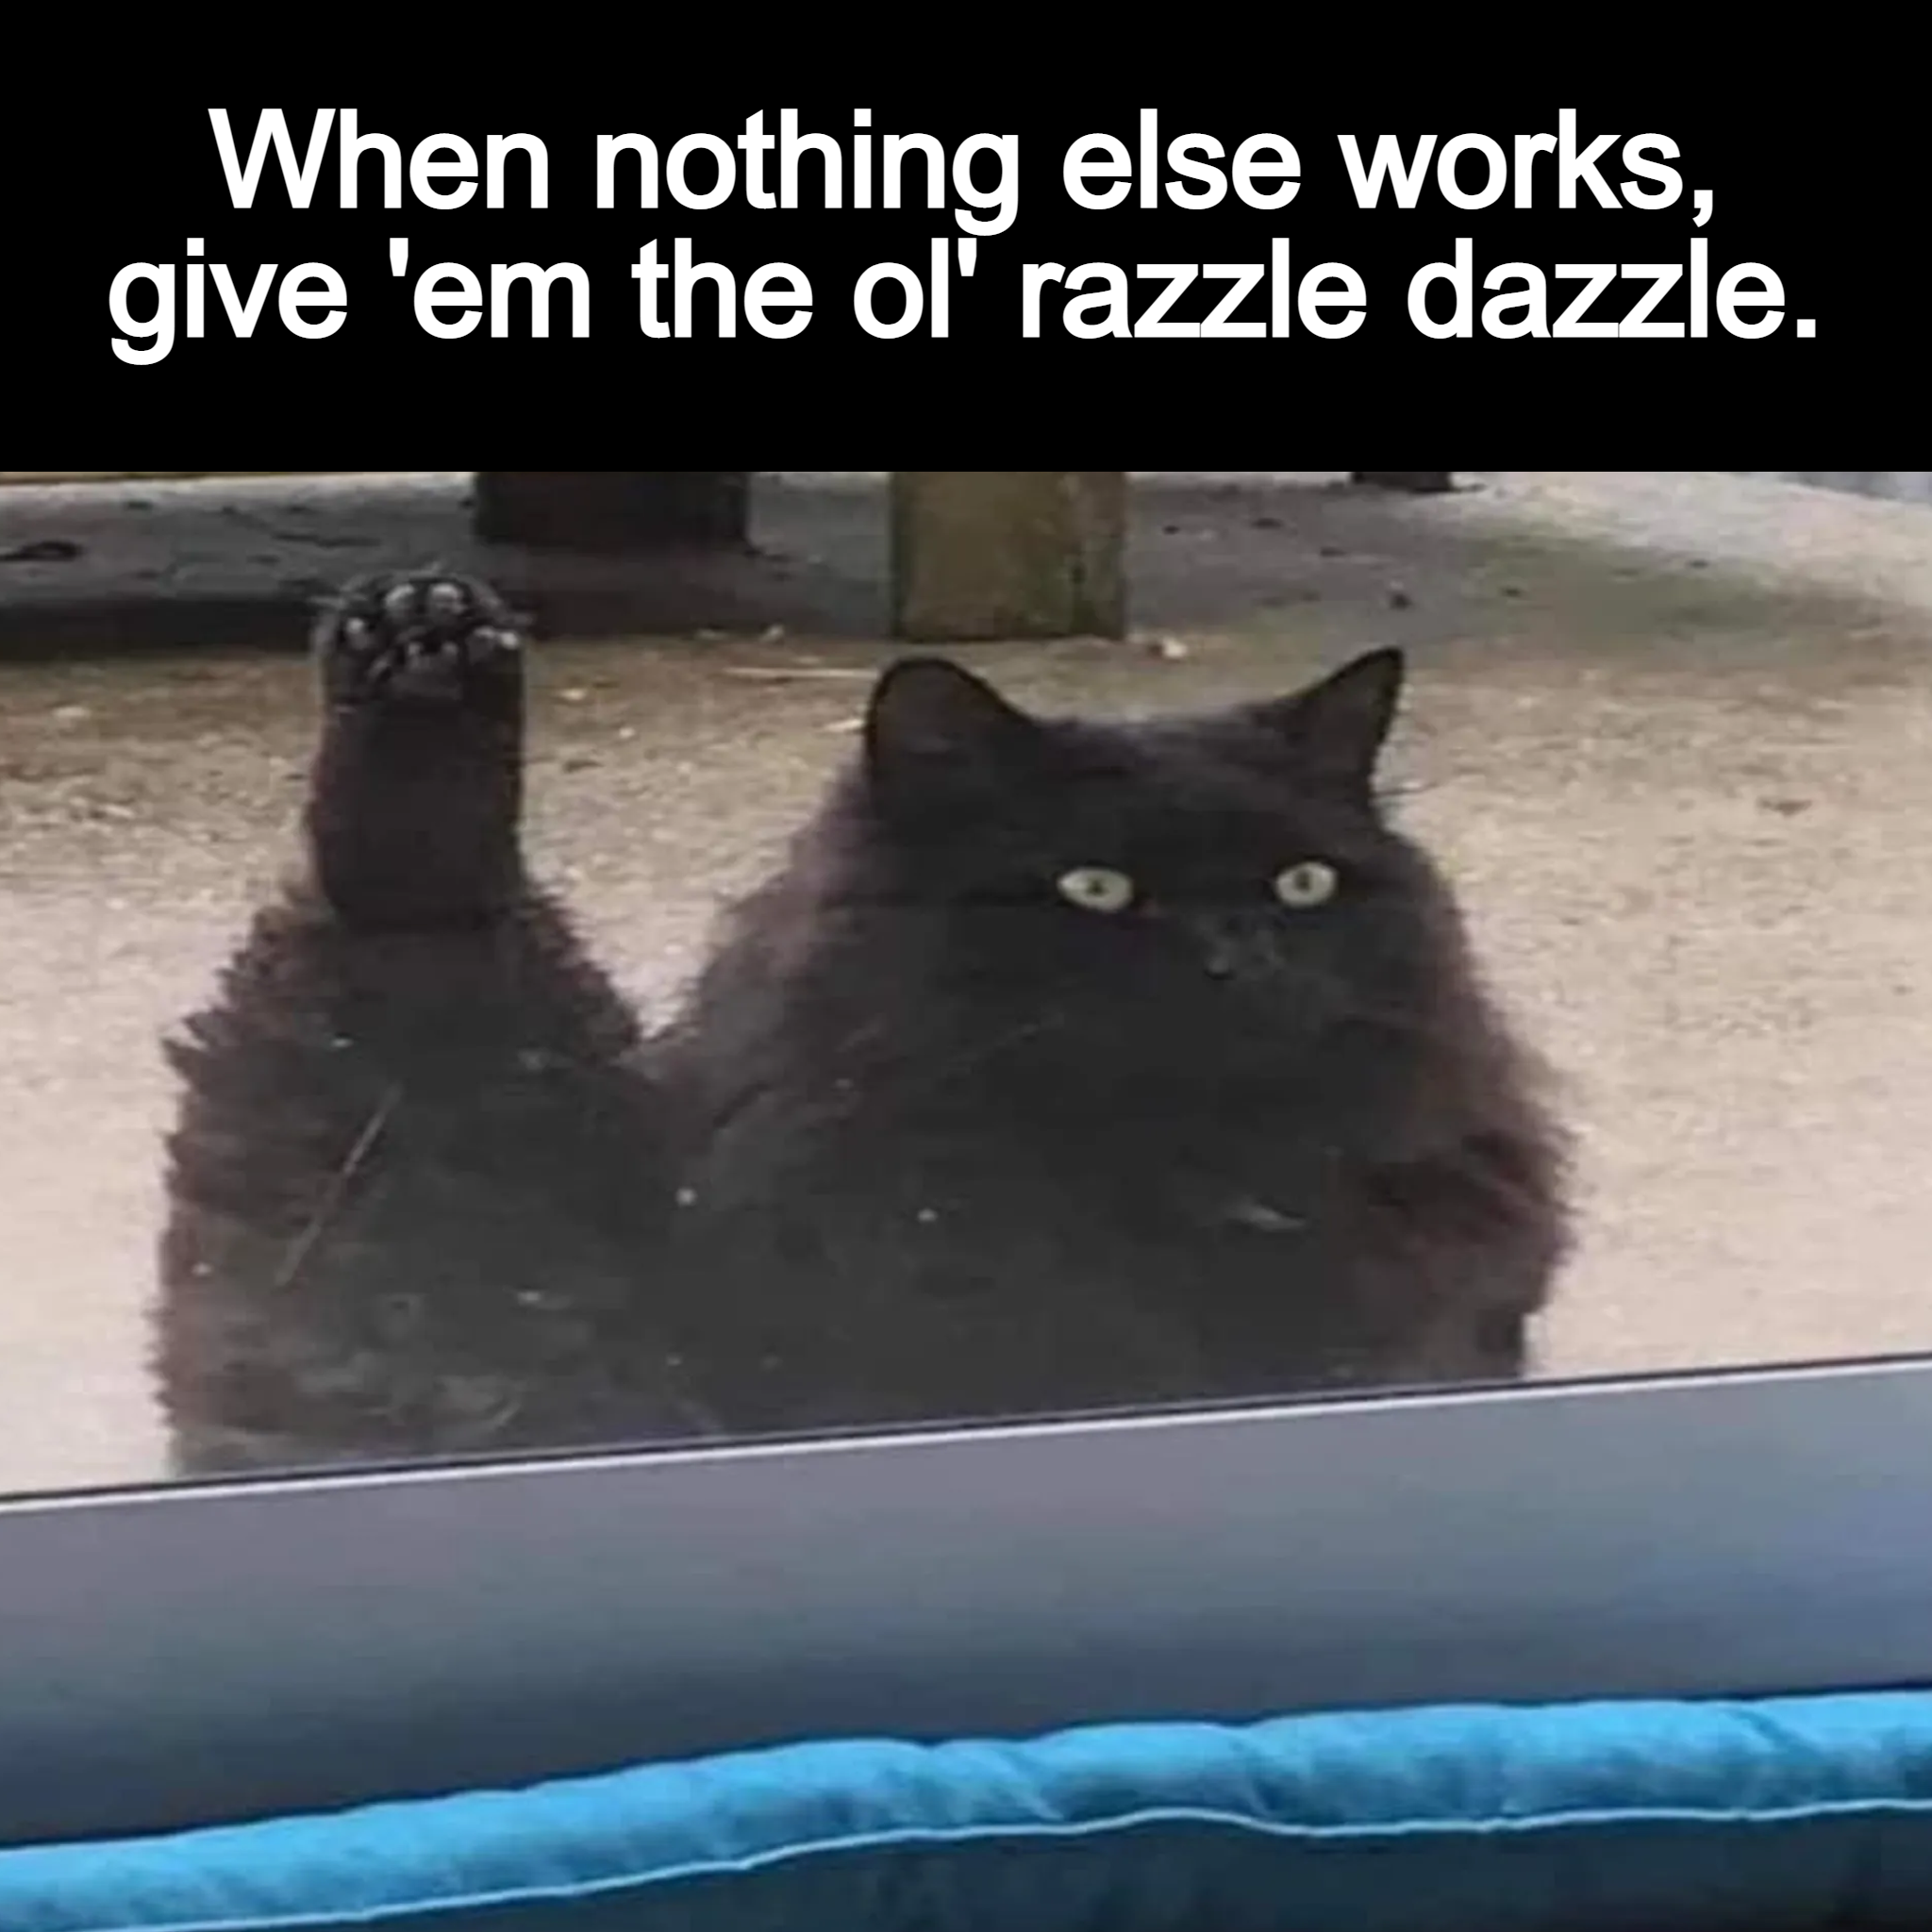 Razzle dazzle.